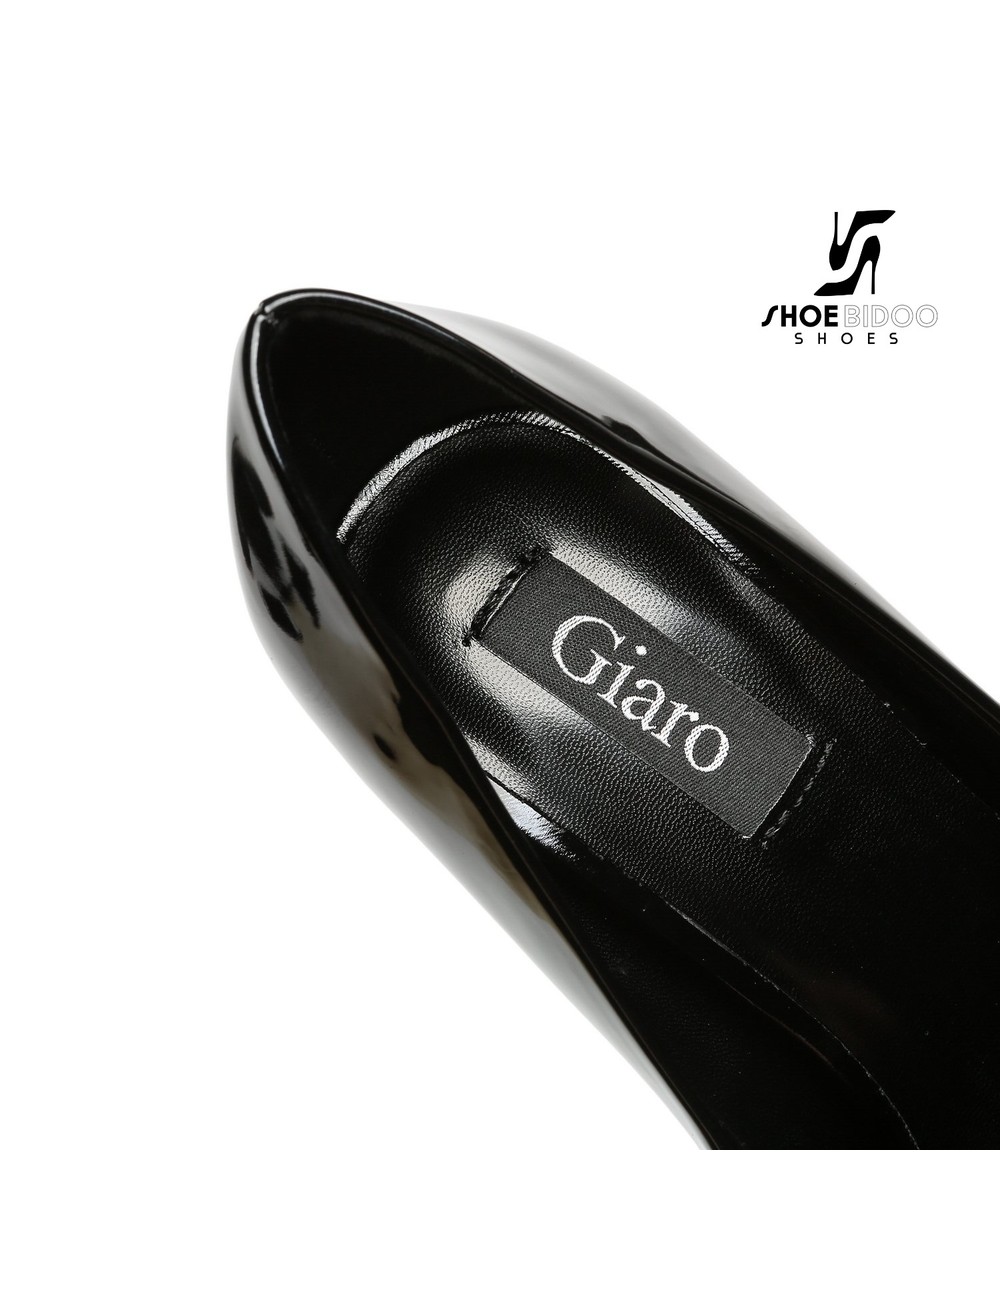 Giaro Giaro Platform pumpt SCANT in schwarzem Patent